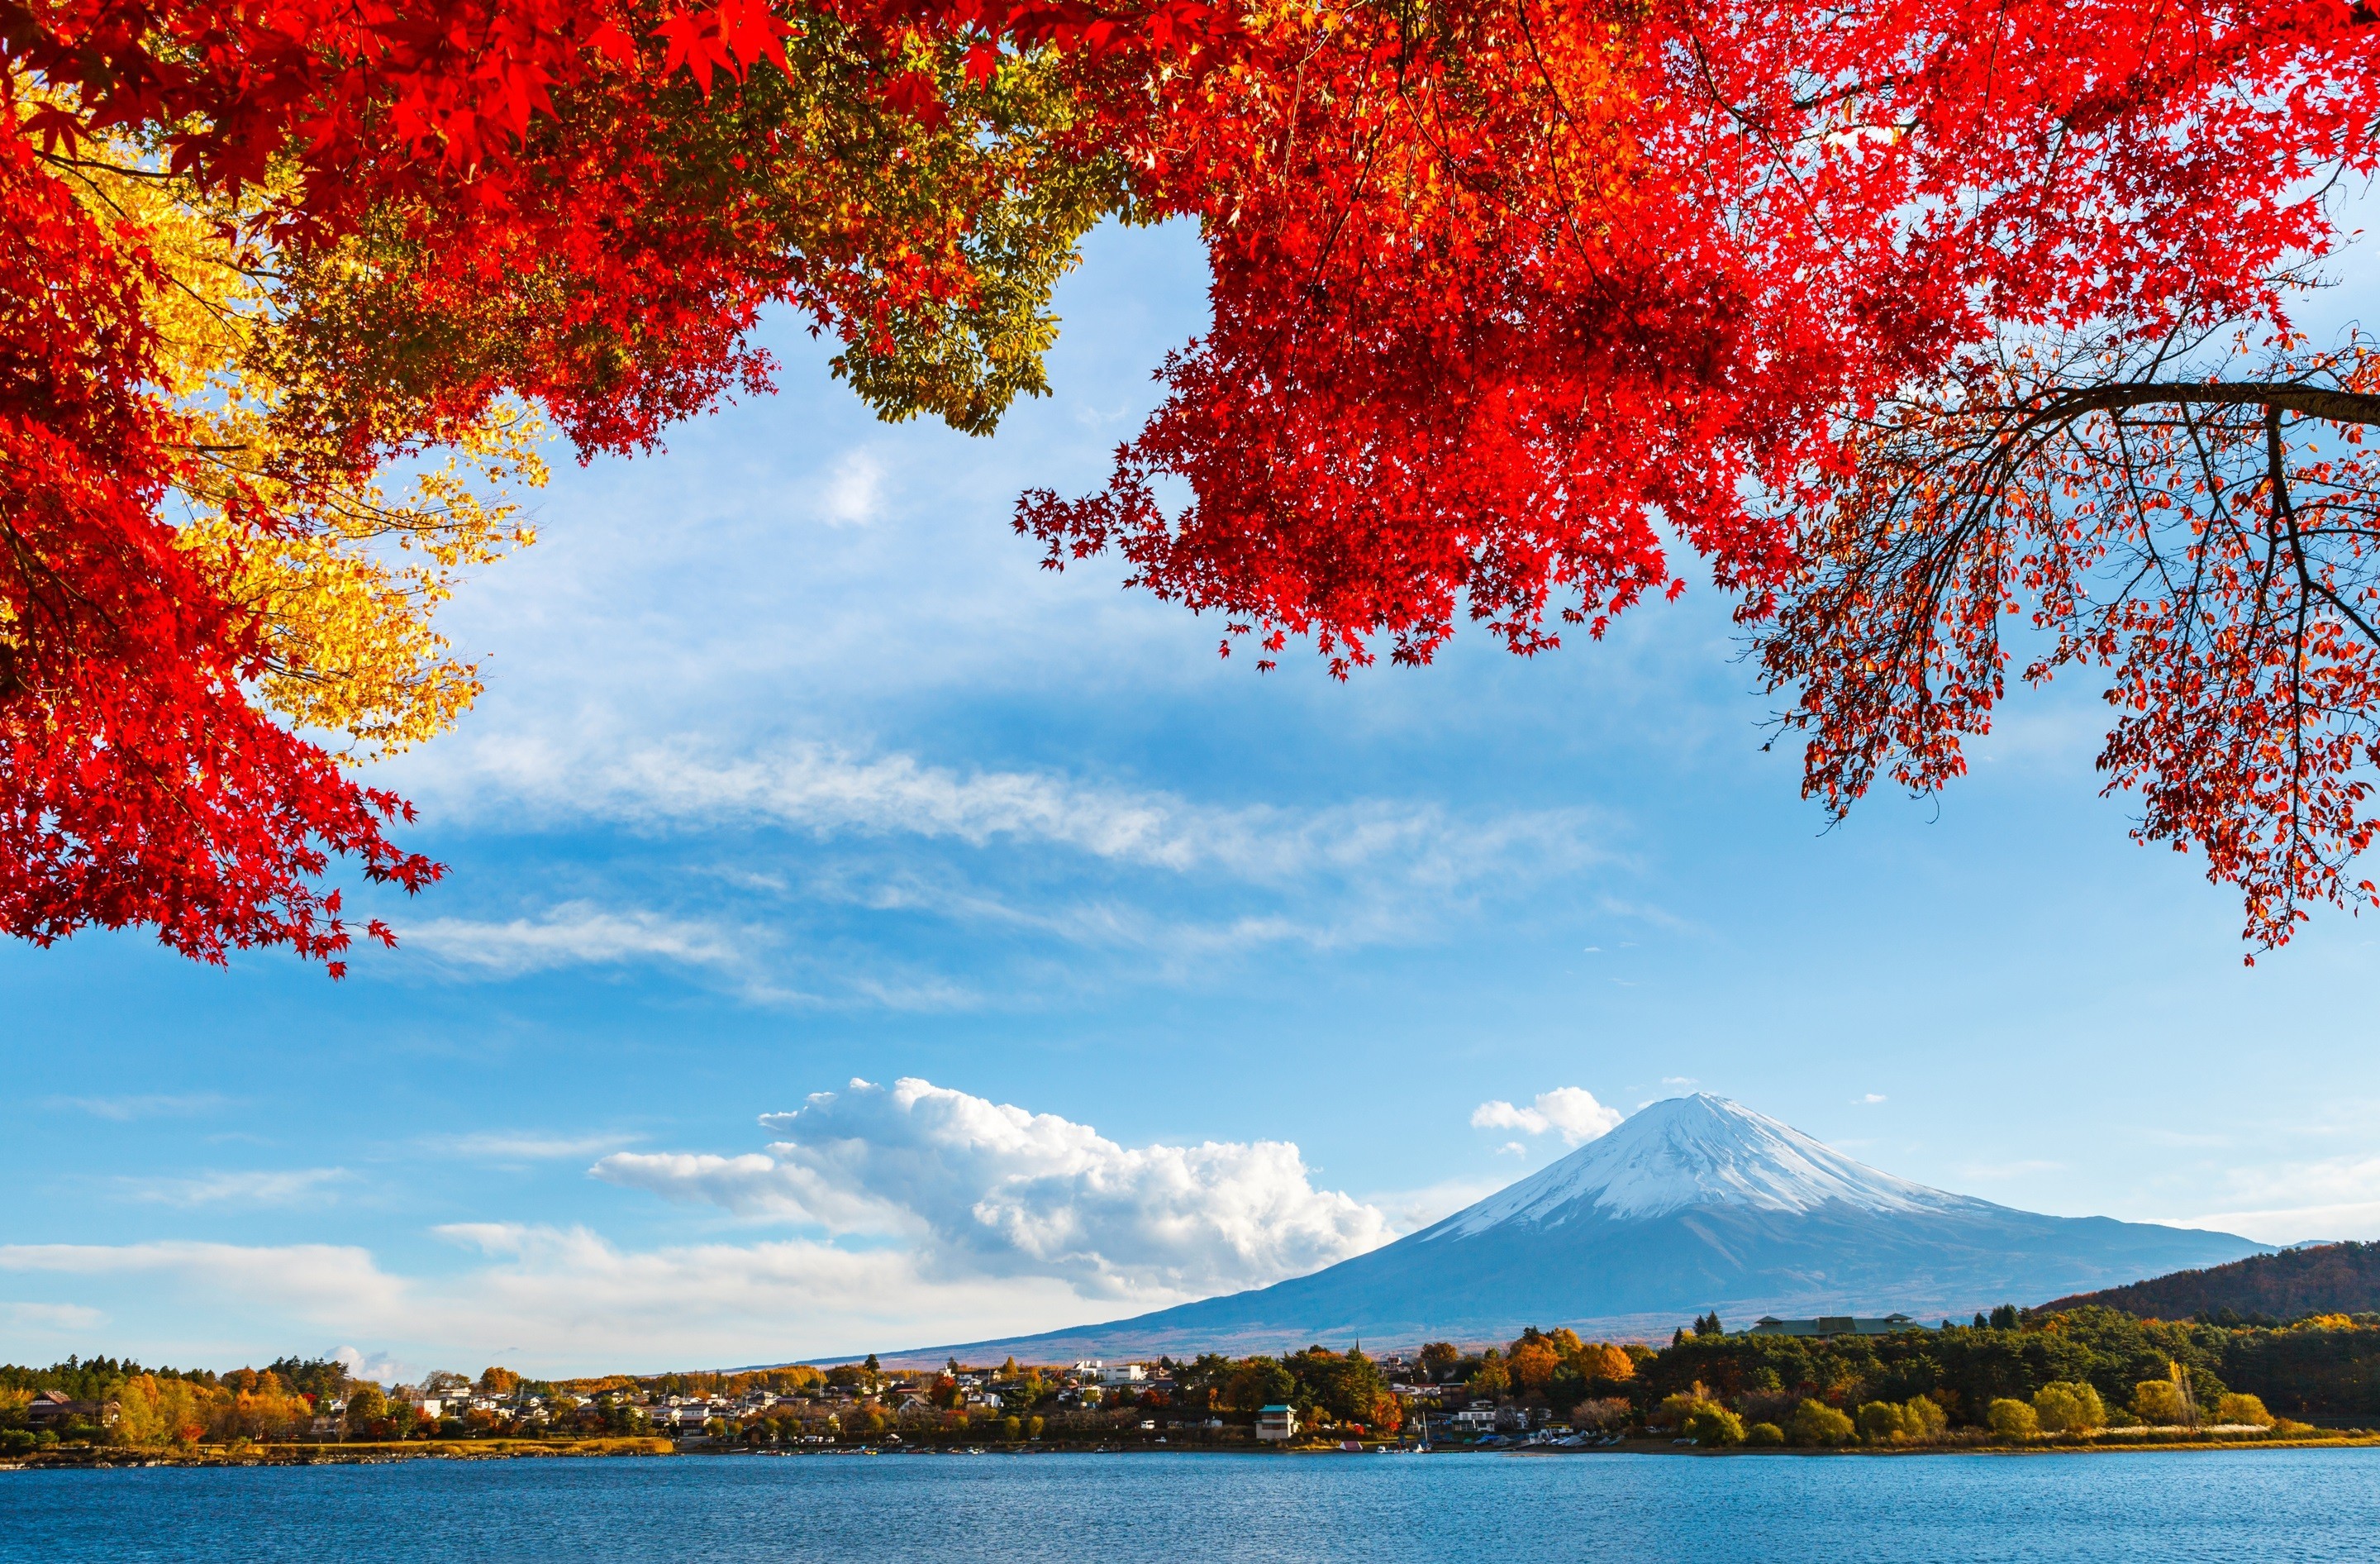 342742 Hintergrundbild herunterladen erde/natur, fujisan, herbst, japan, vulkan, vulkane - Bildschirmschoner und Bilder kostenlos